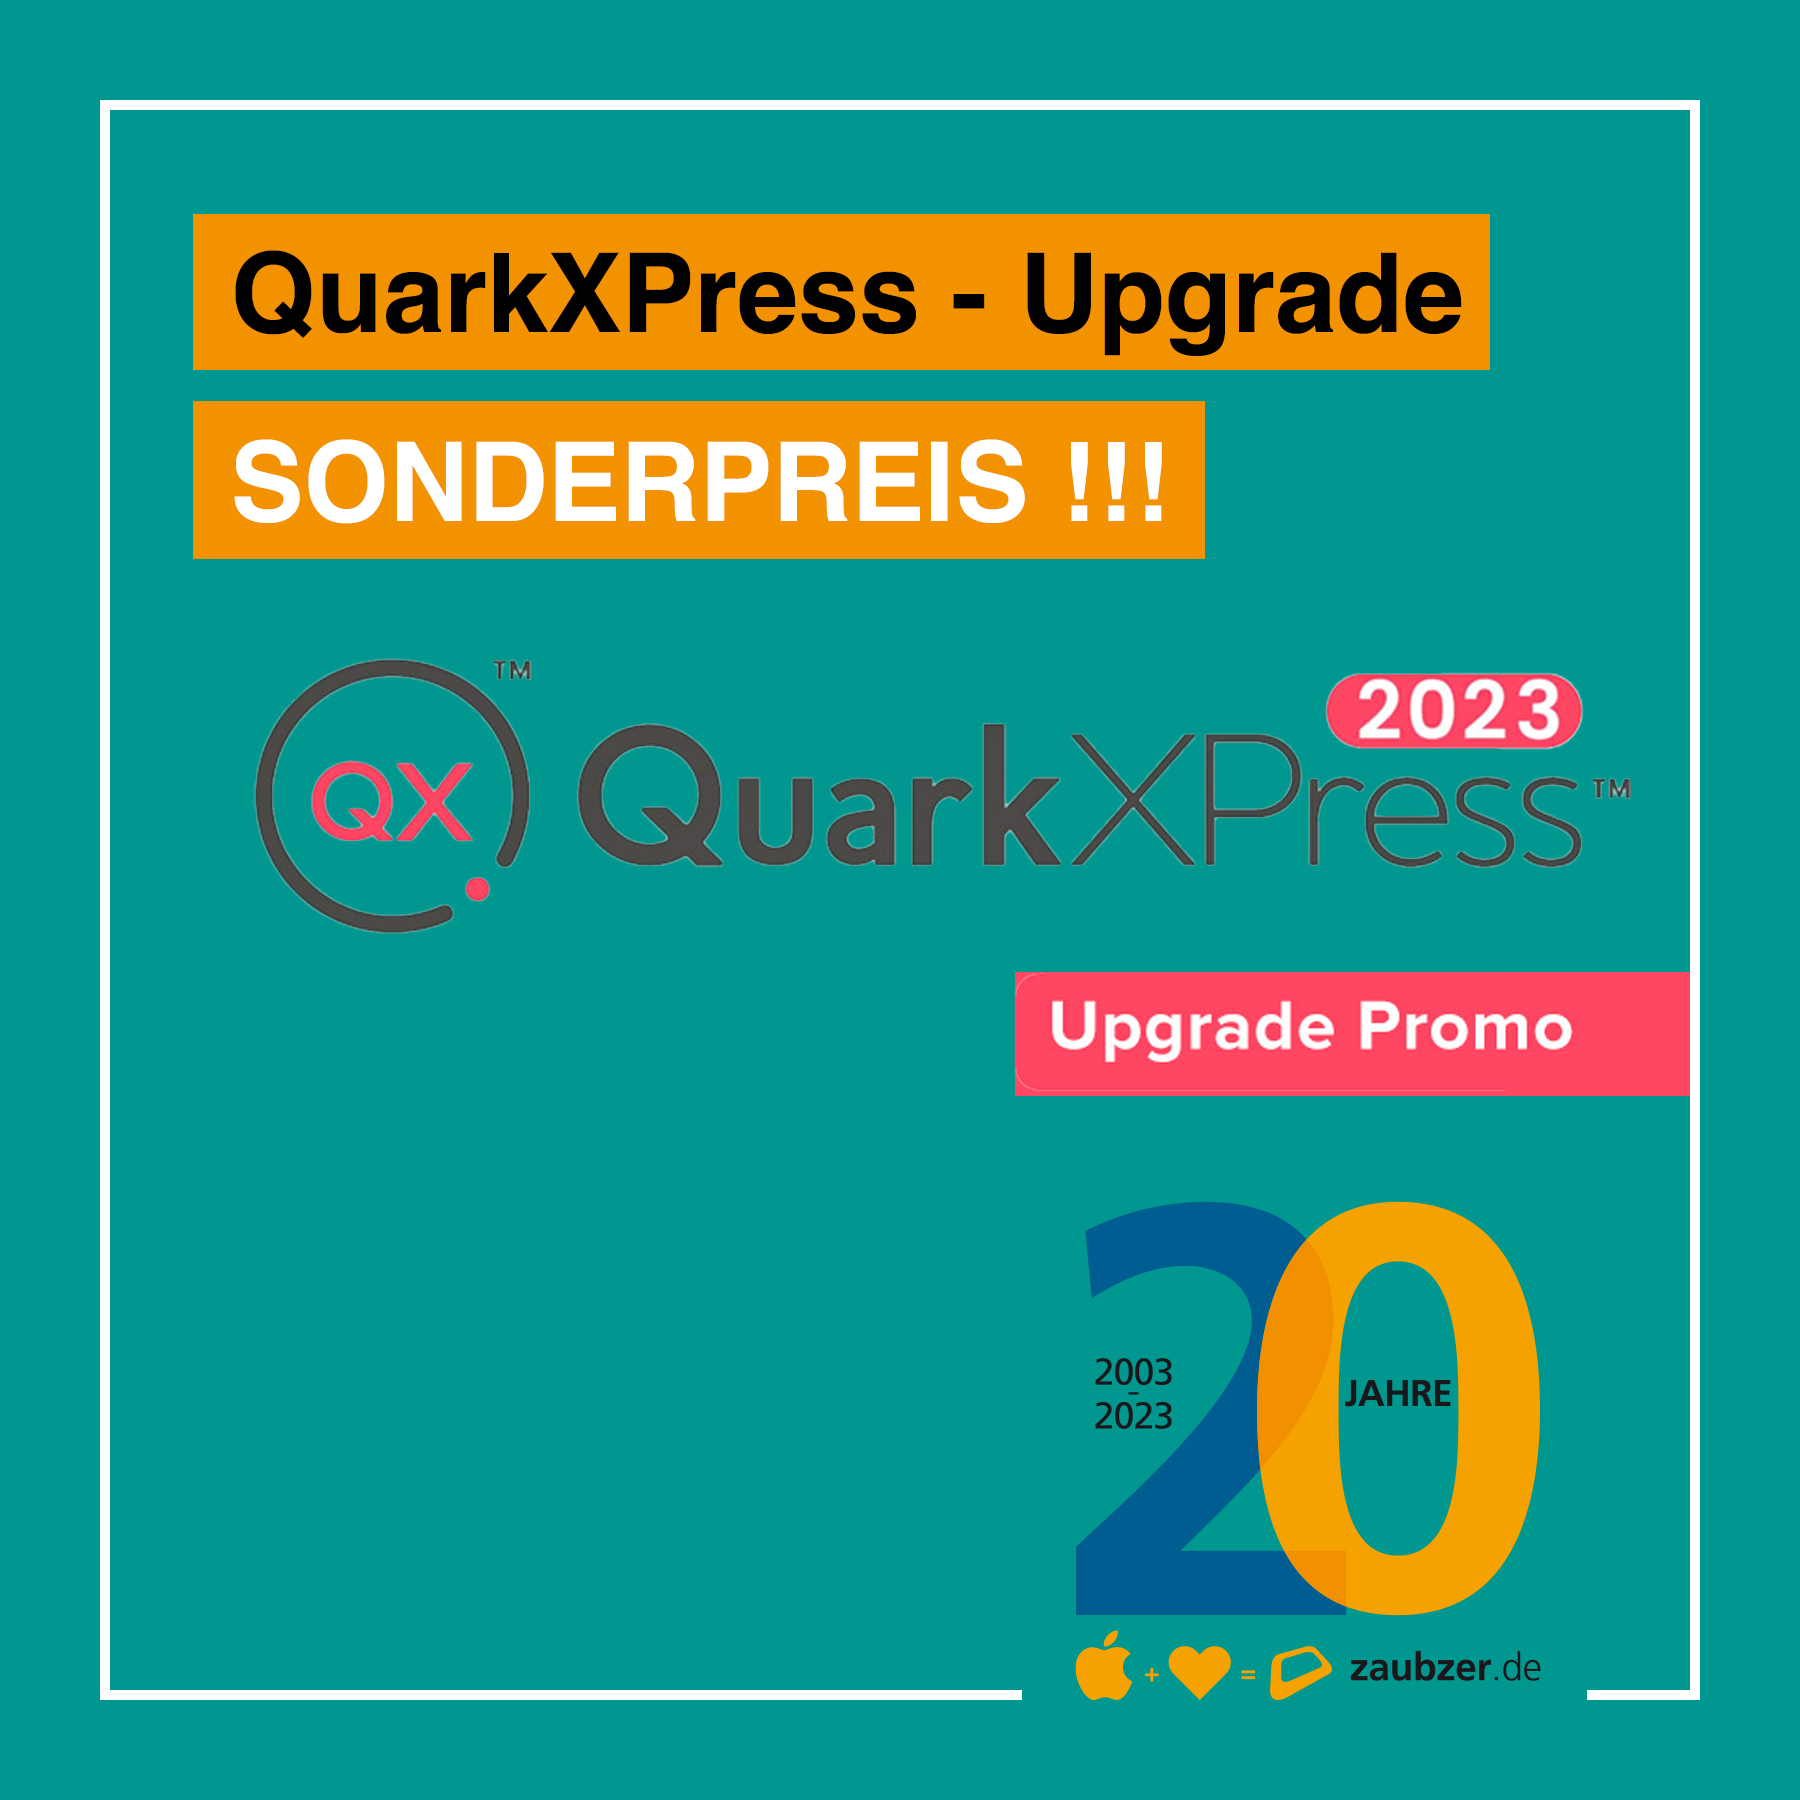 QuarkXPress Upgrade - zum Sonderpreis - zaubzer.de - Mannheim